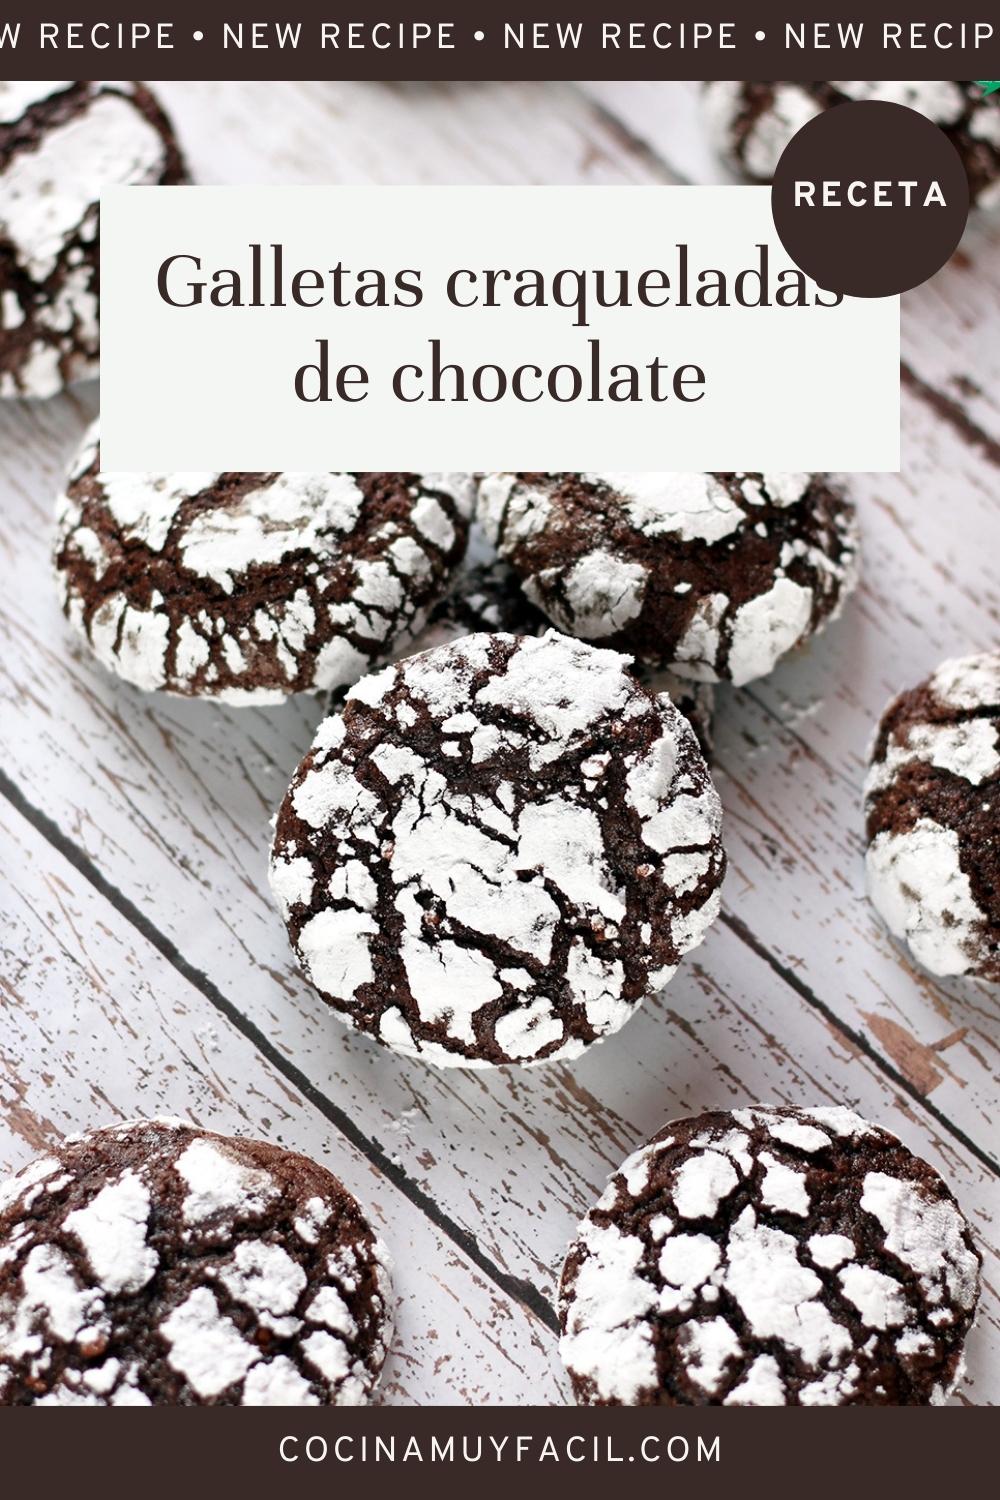 Galletas craqueladas de chocolate. Receta | cocinamuyfacil.com